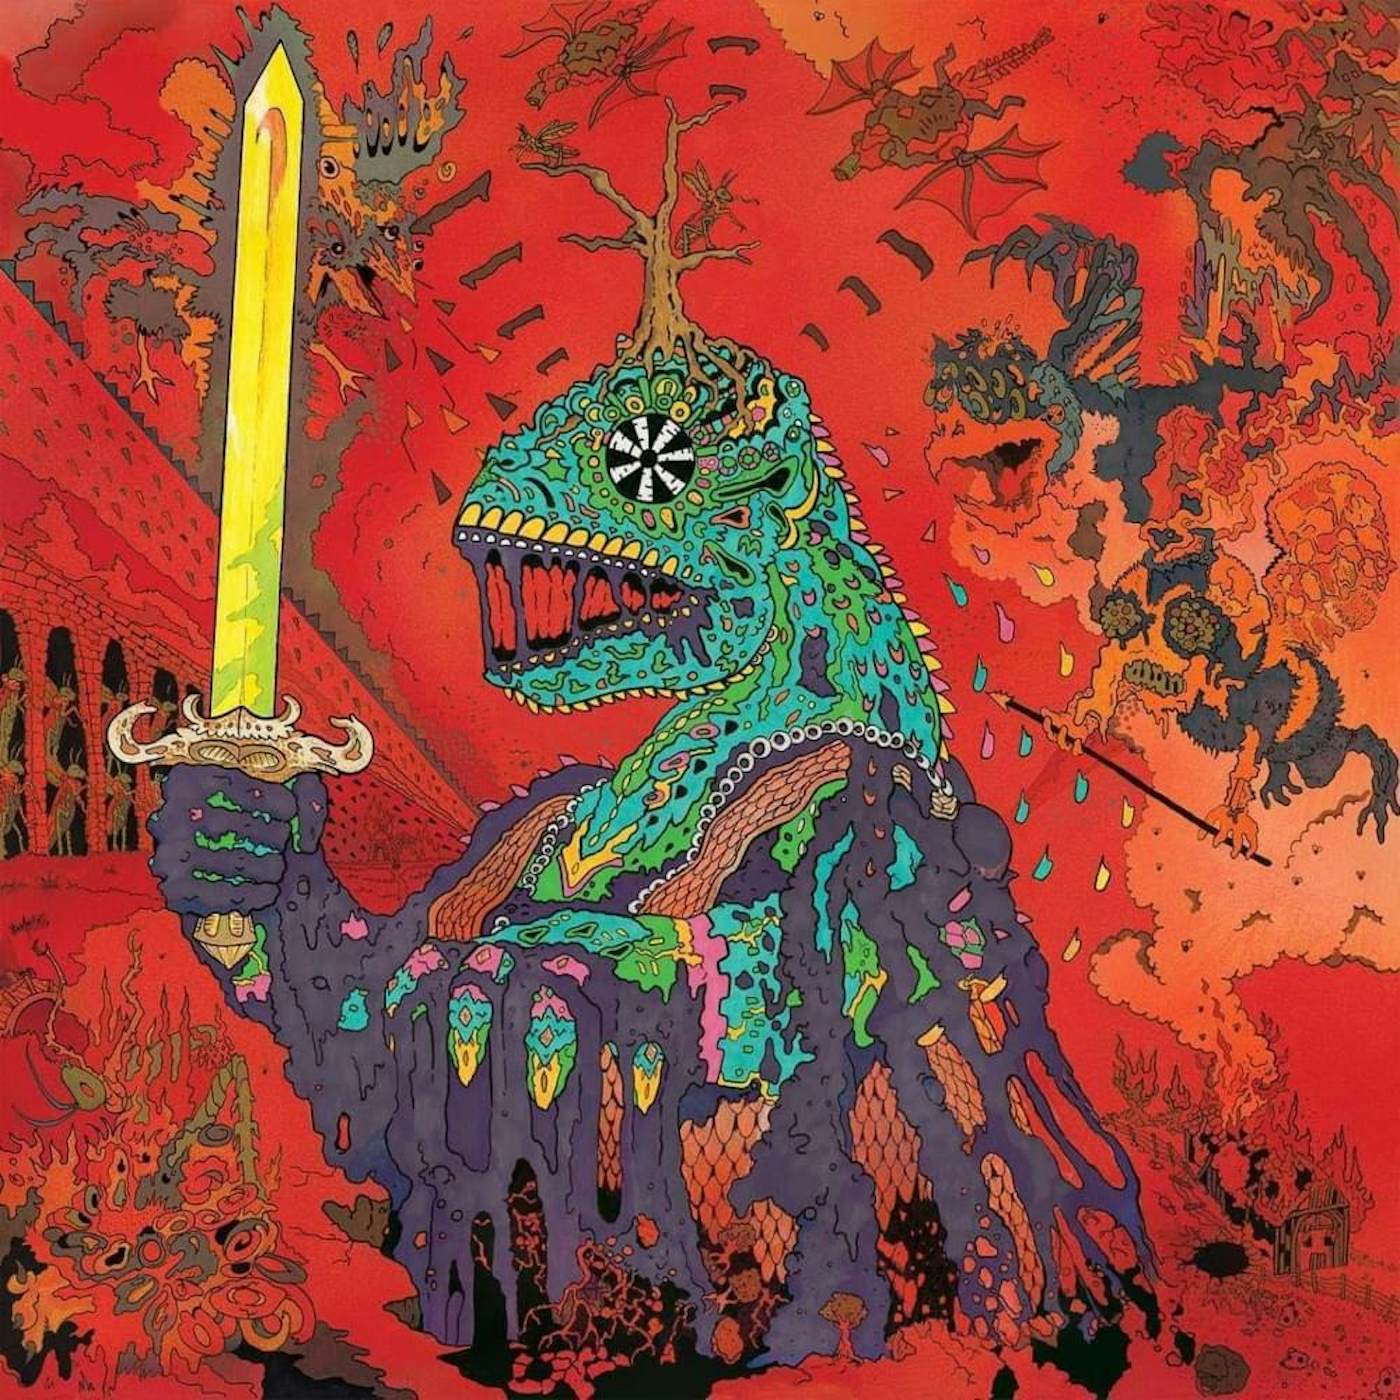 King Gizzard & The Lizard Wizard 12 Bar Bruise (Sea Foam Green) Vinyl Record